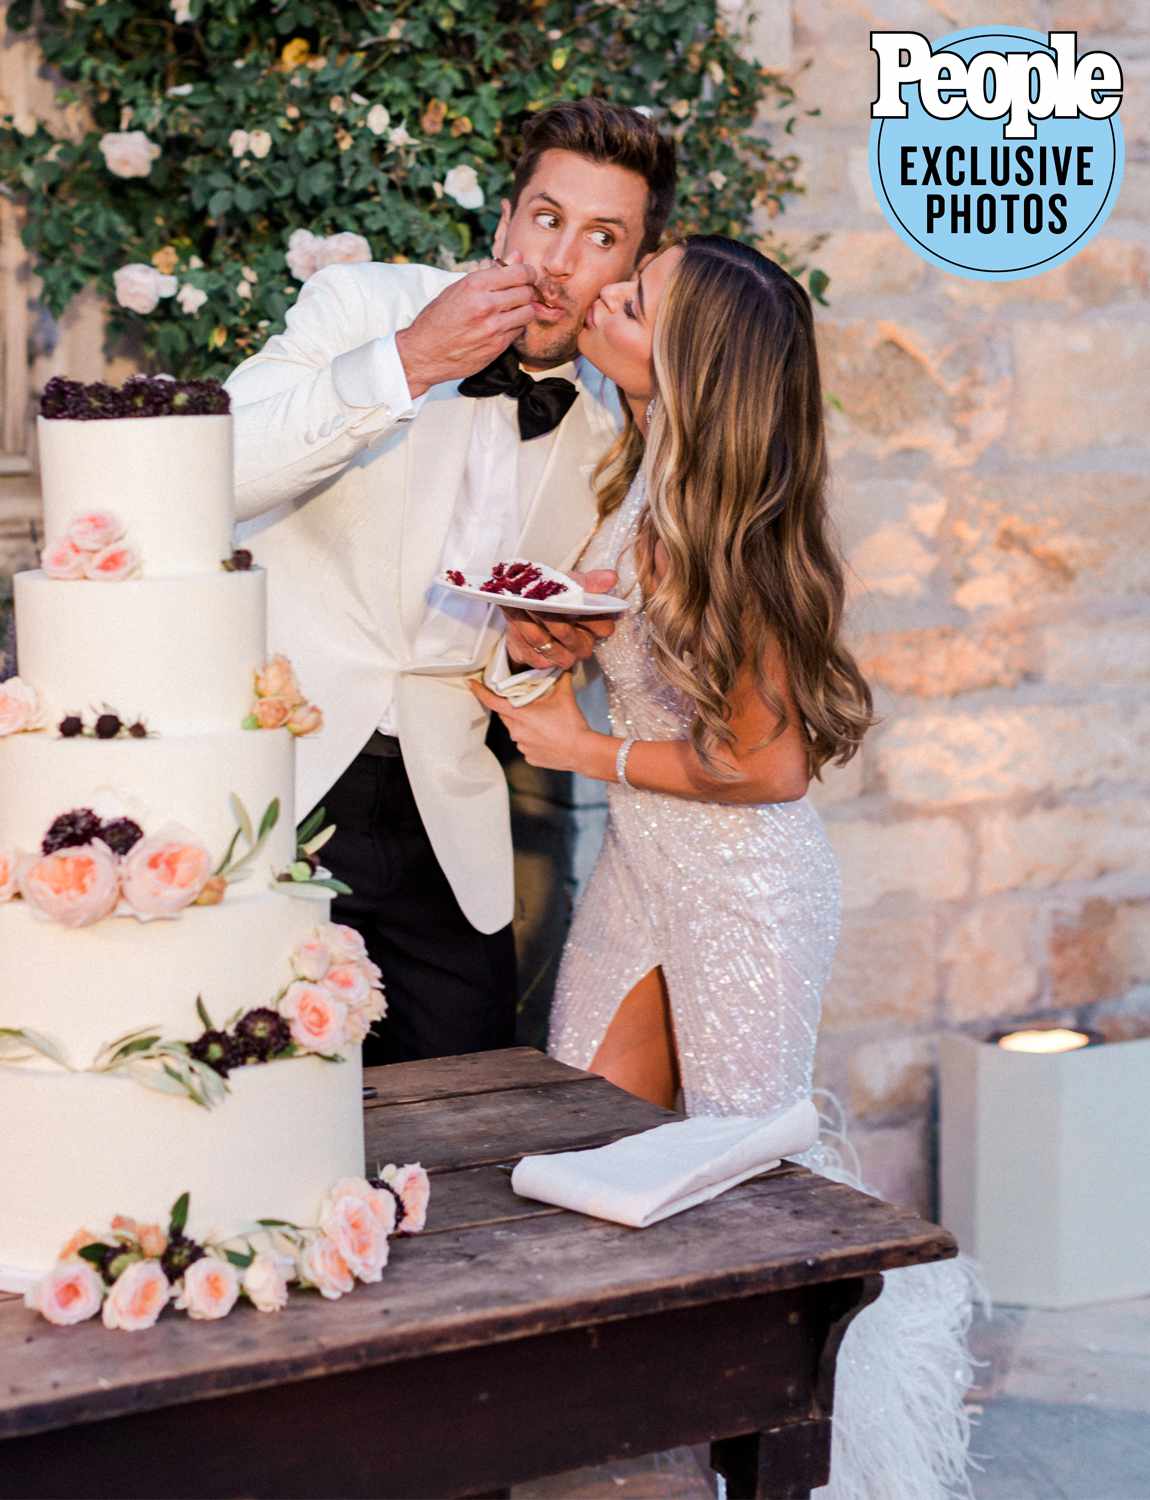 See The Bachelorette Stars JoJo Fletcher and Jordan Rodgers' 'Playful and Fun' 5-Tier Wedding Cake